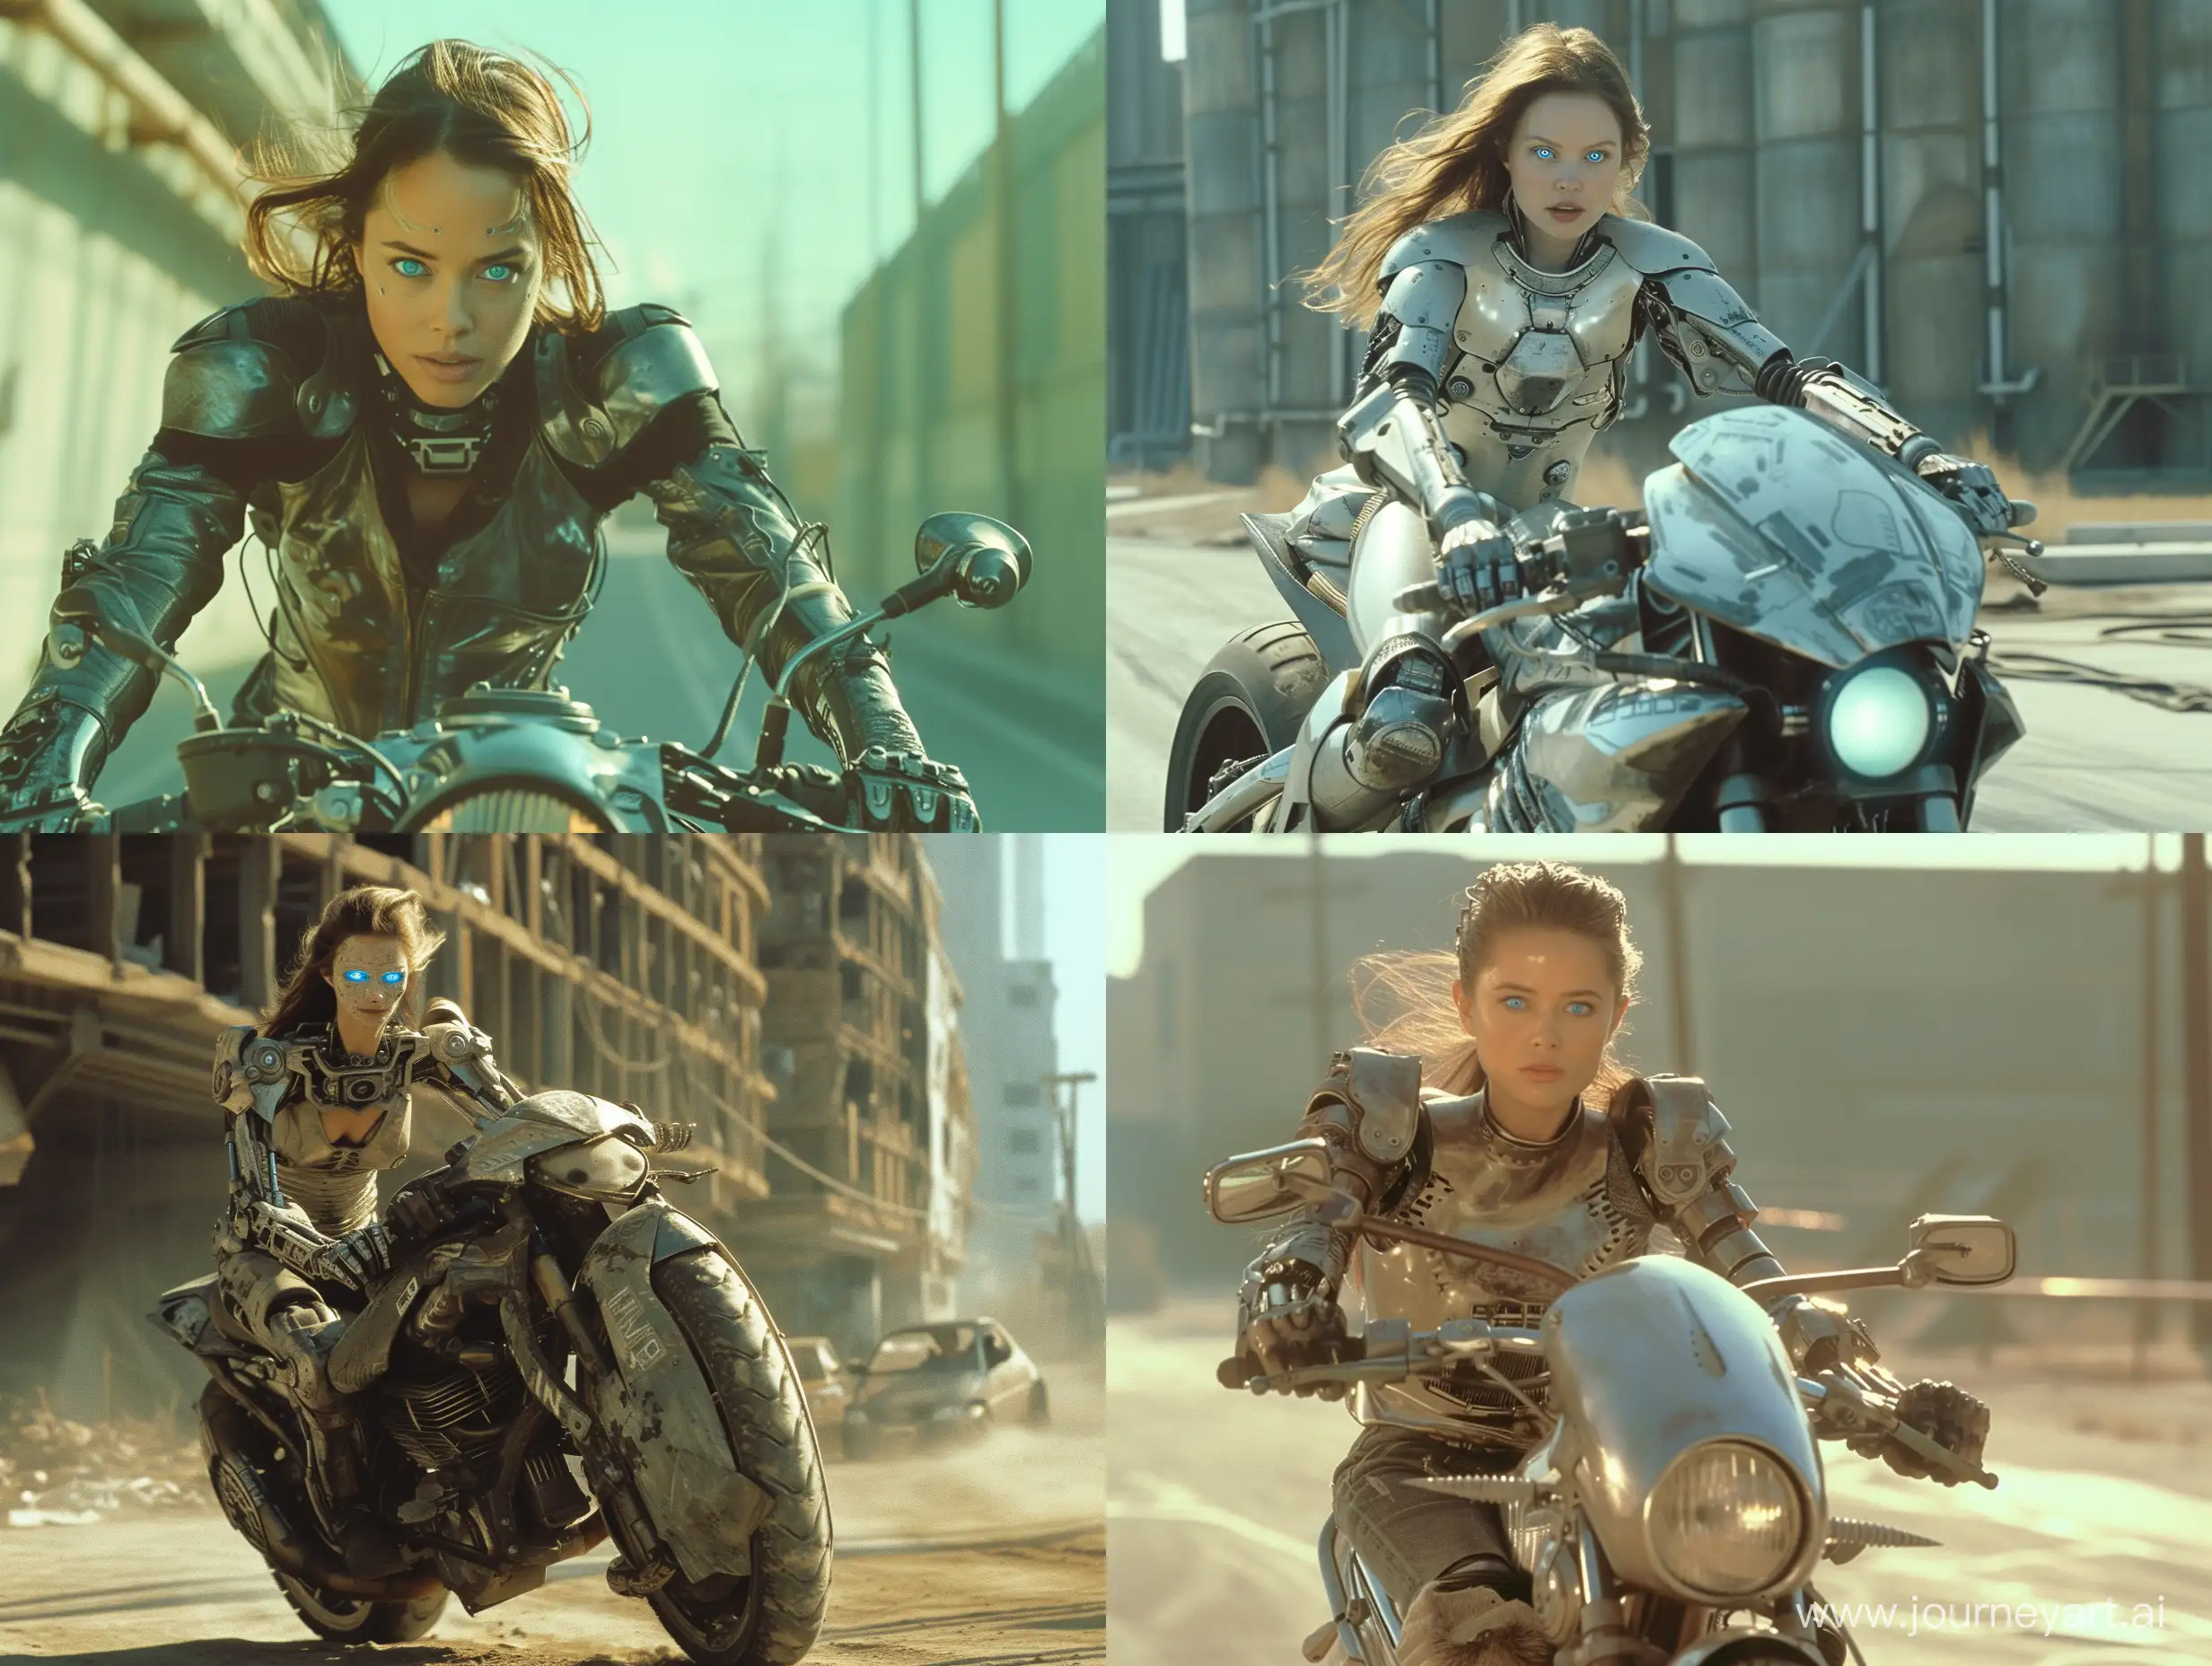 Nostalgic-2000s-SciFi-Cyborg-Woman-Riding-Motorcycle-in-Dystopian-Landscape